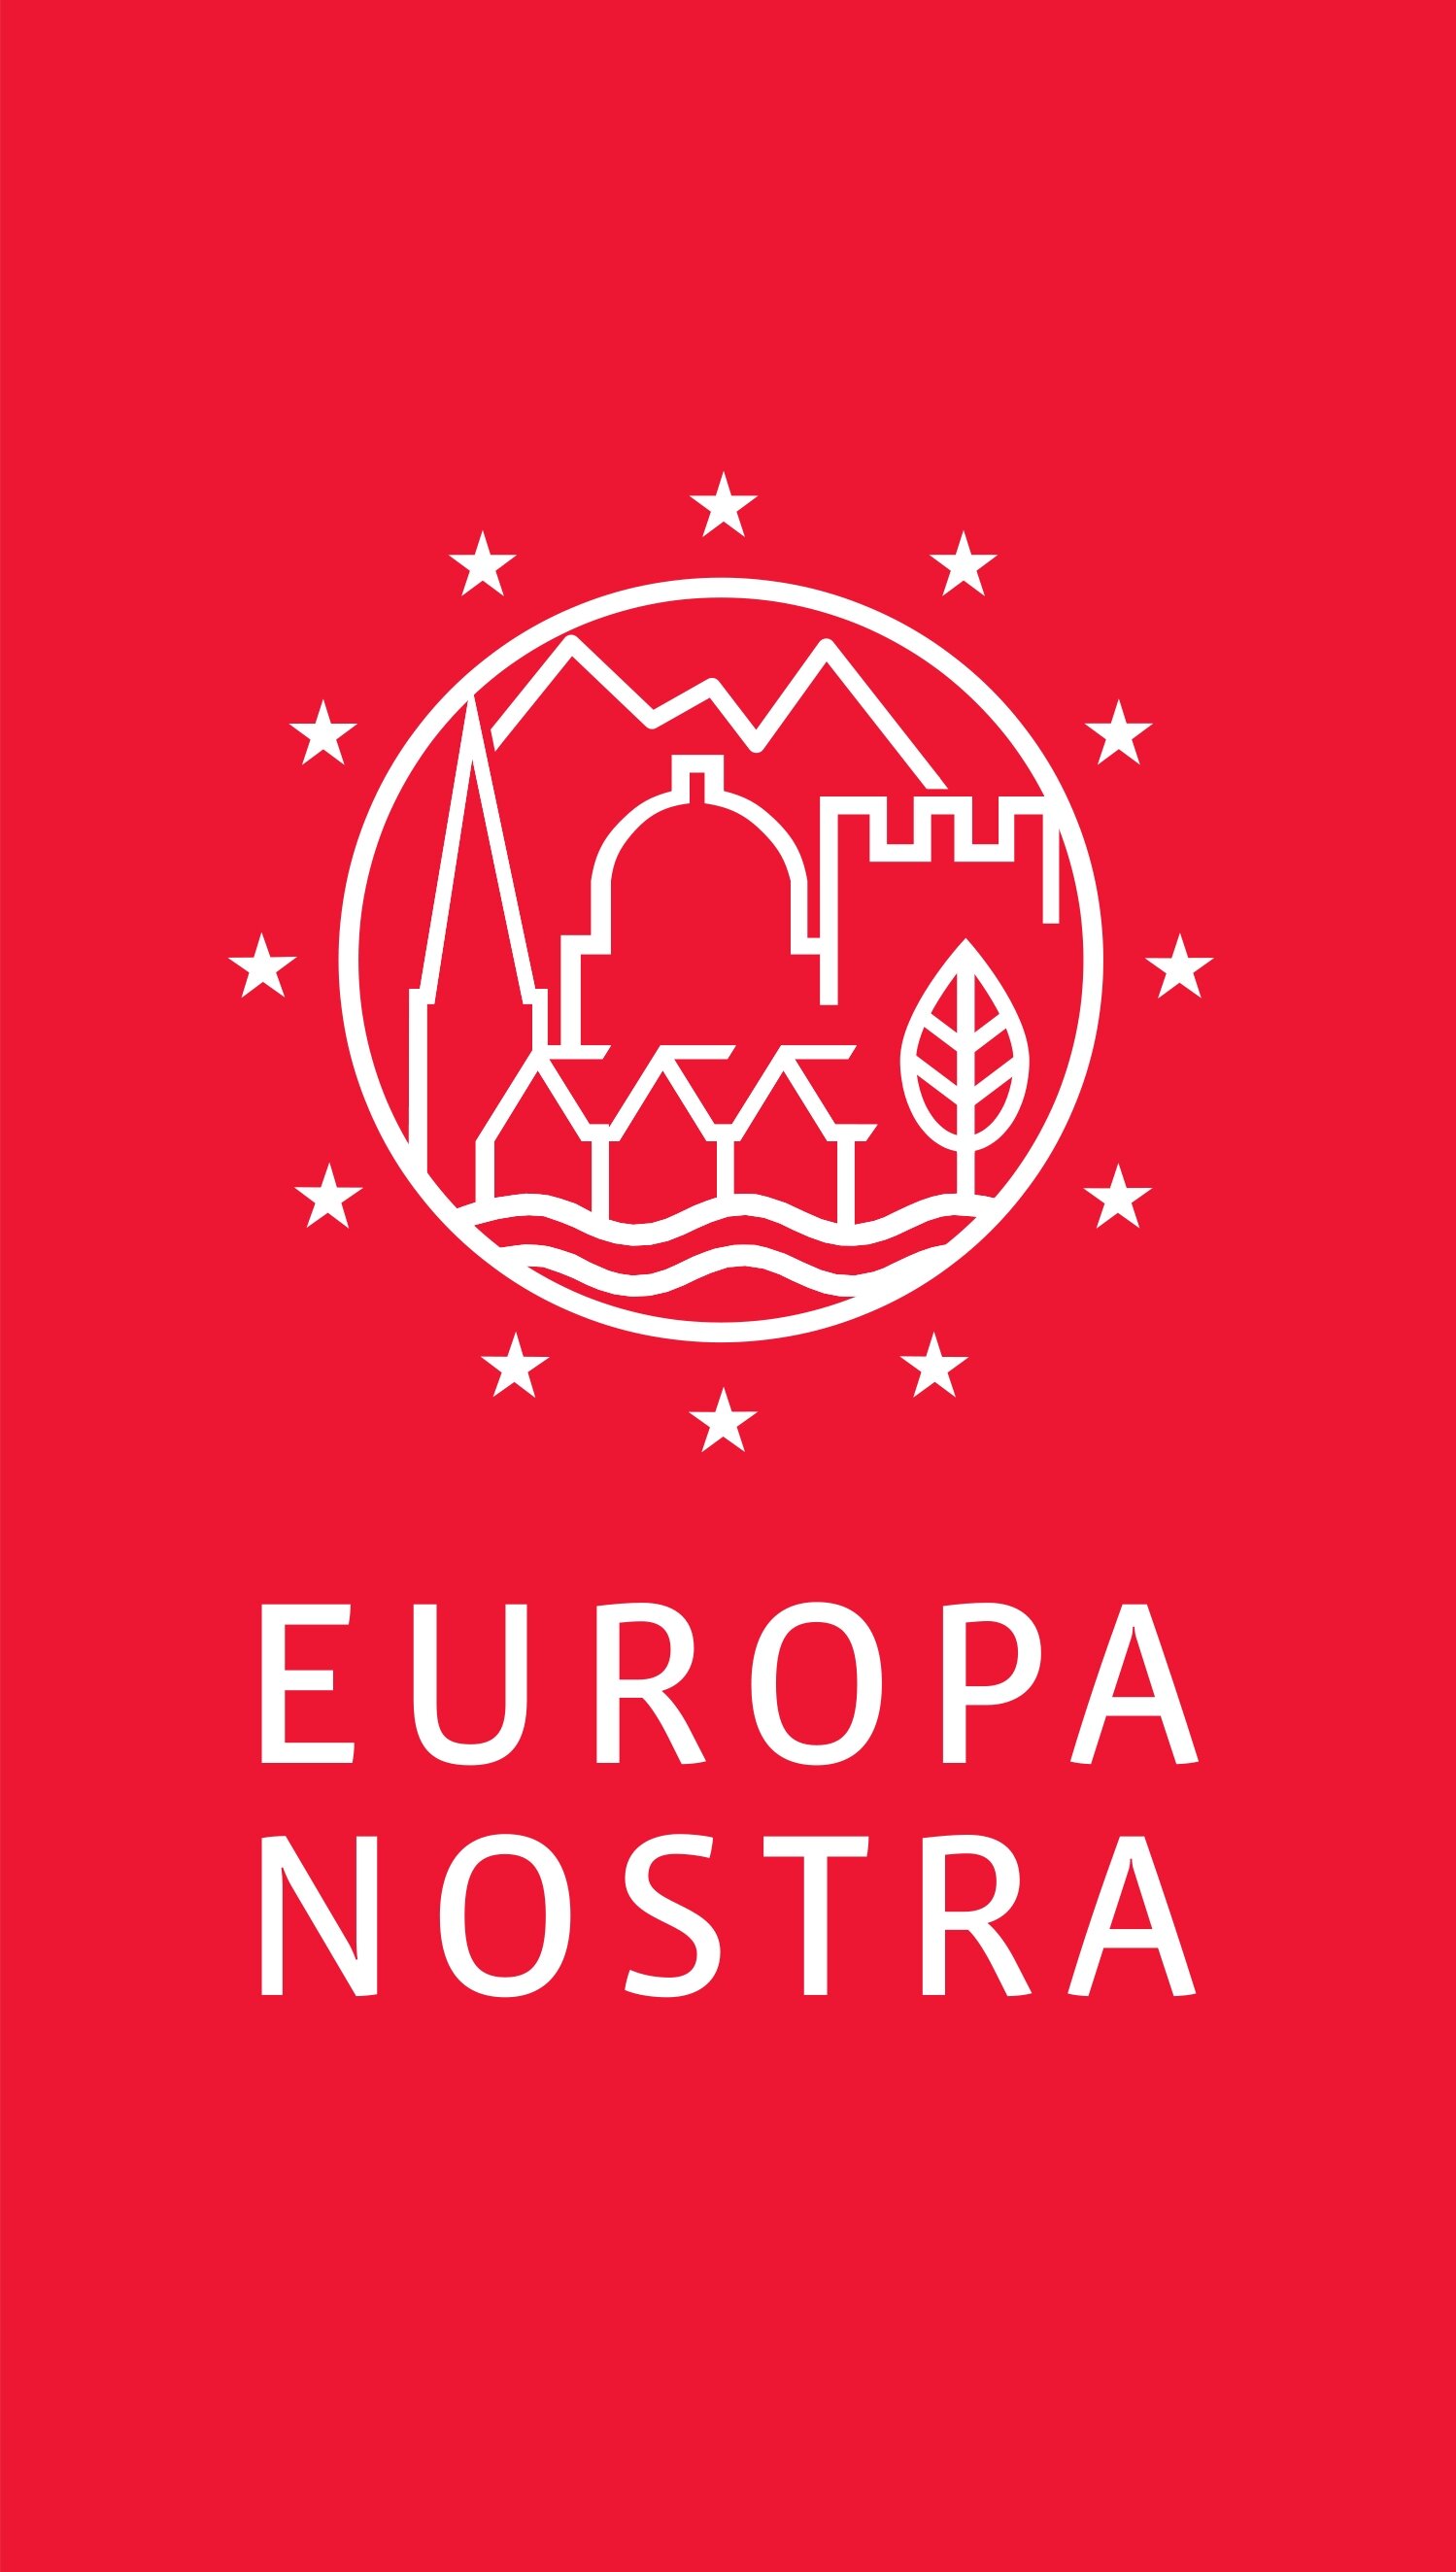 europa_nostra-logo_red_high.jpg